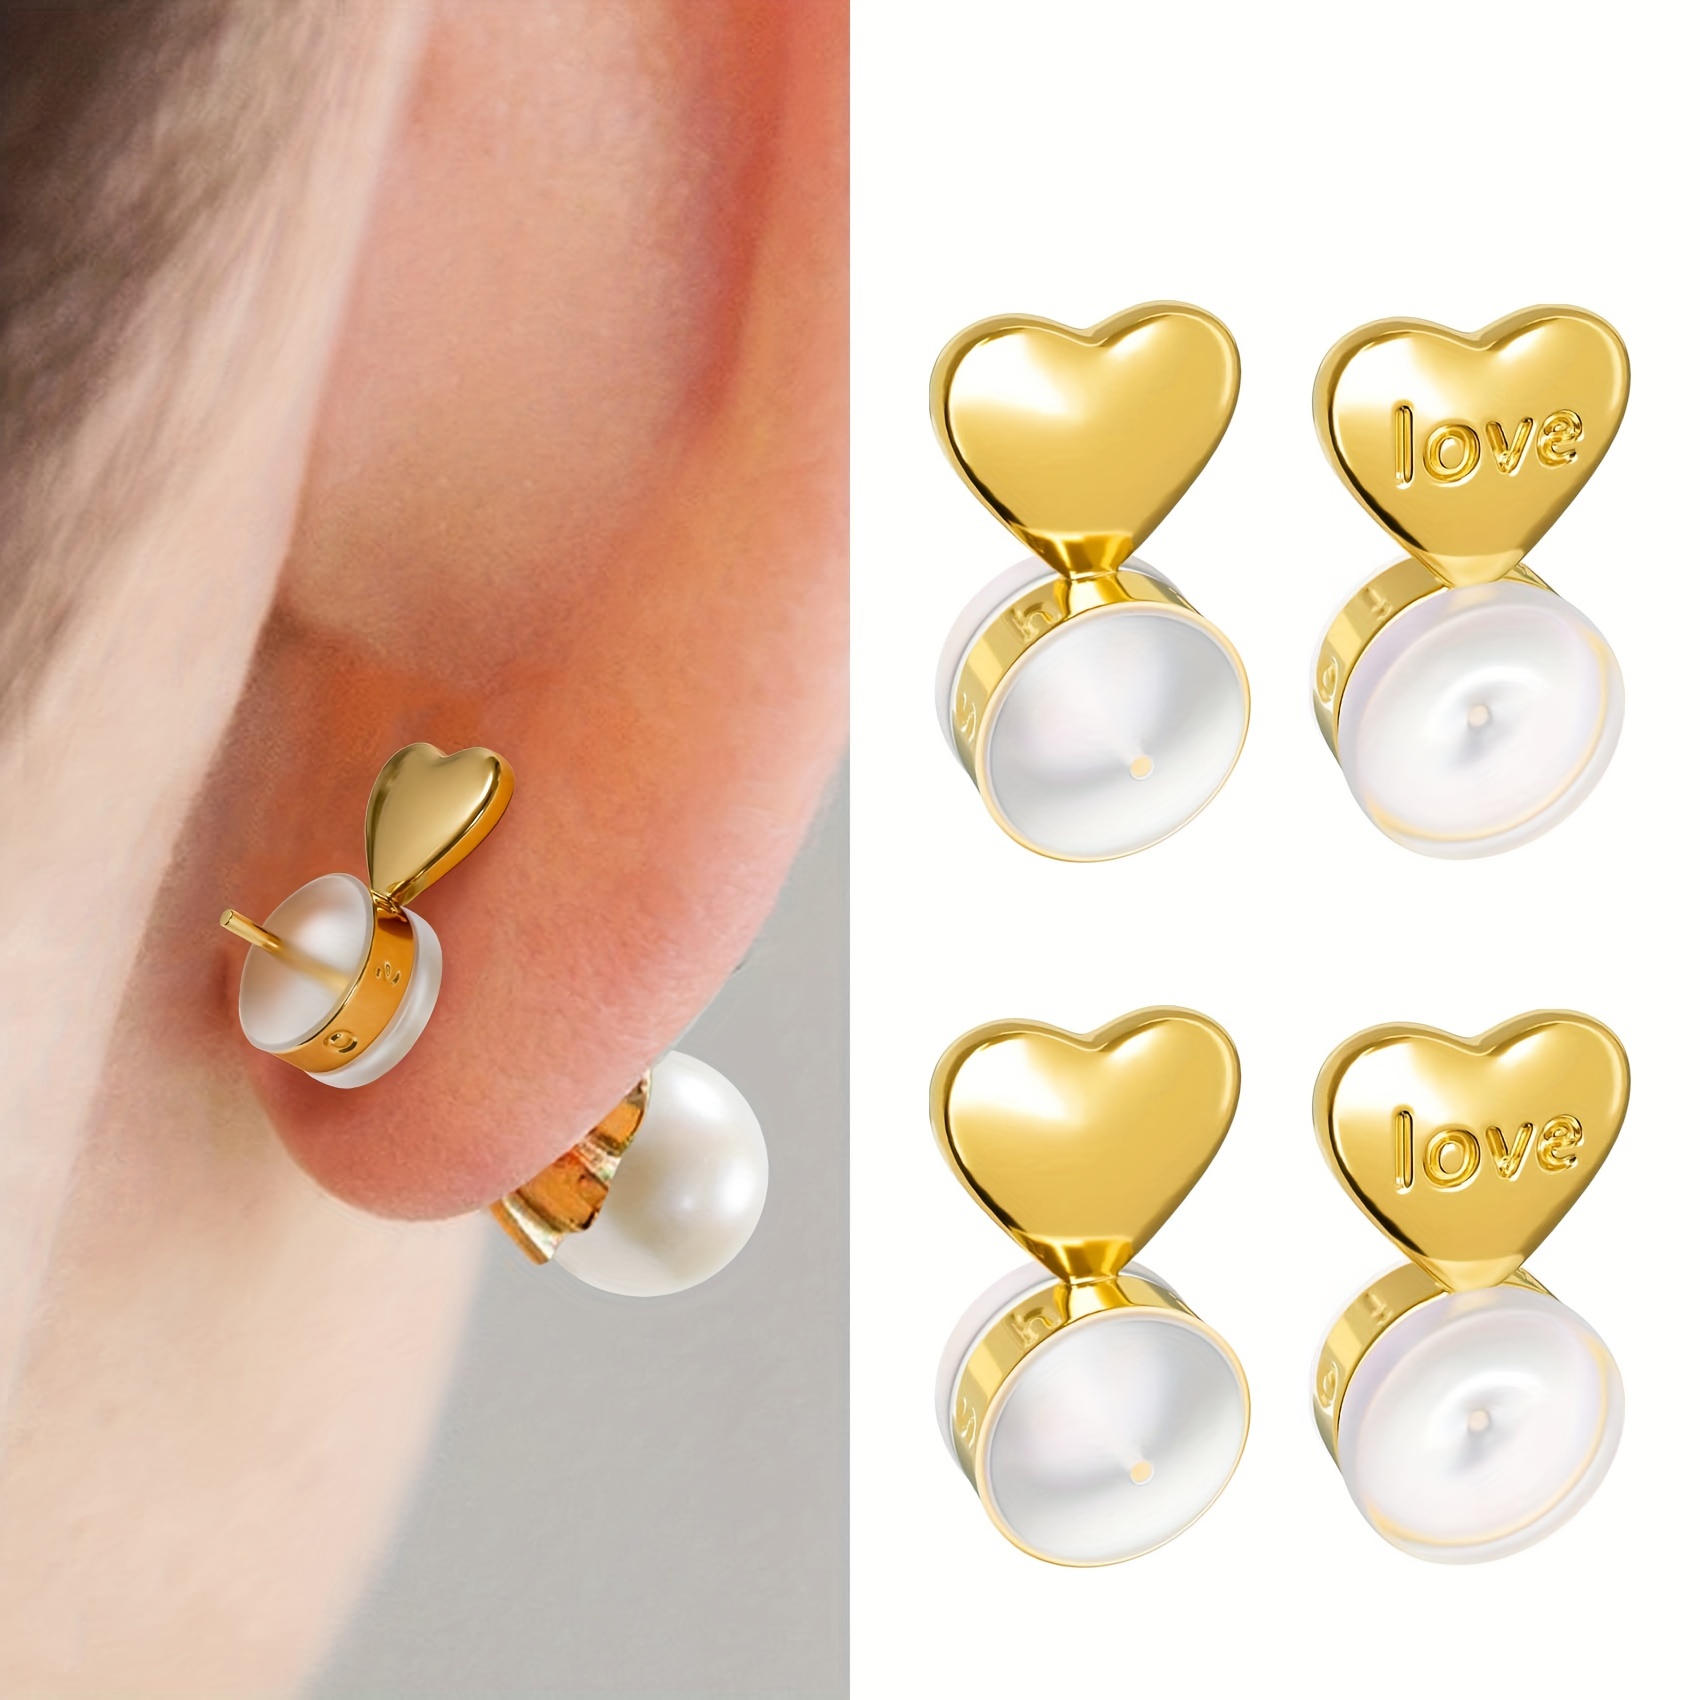 Earring Backs - Earring Back Lifters (4 pcs)